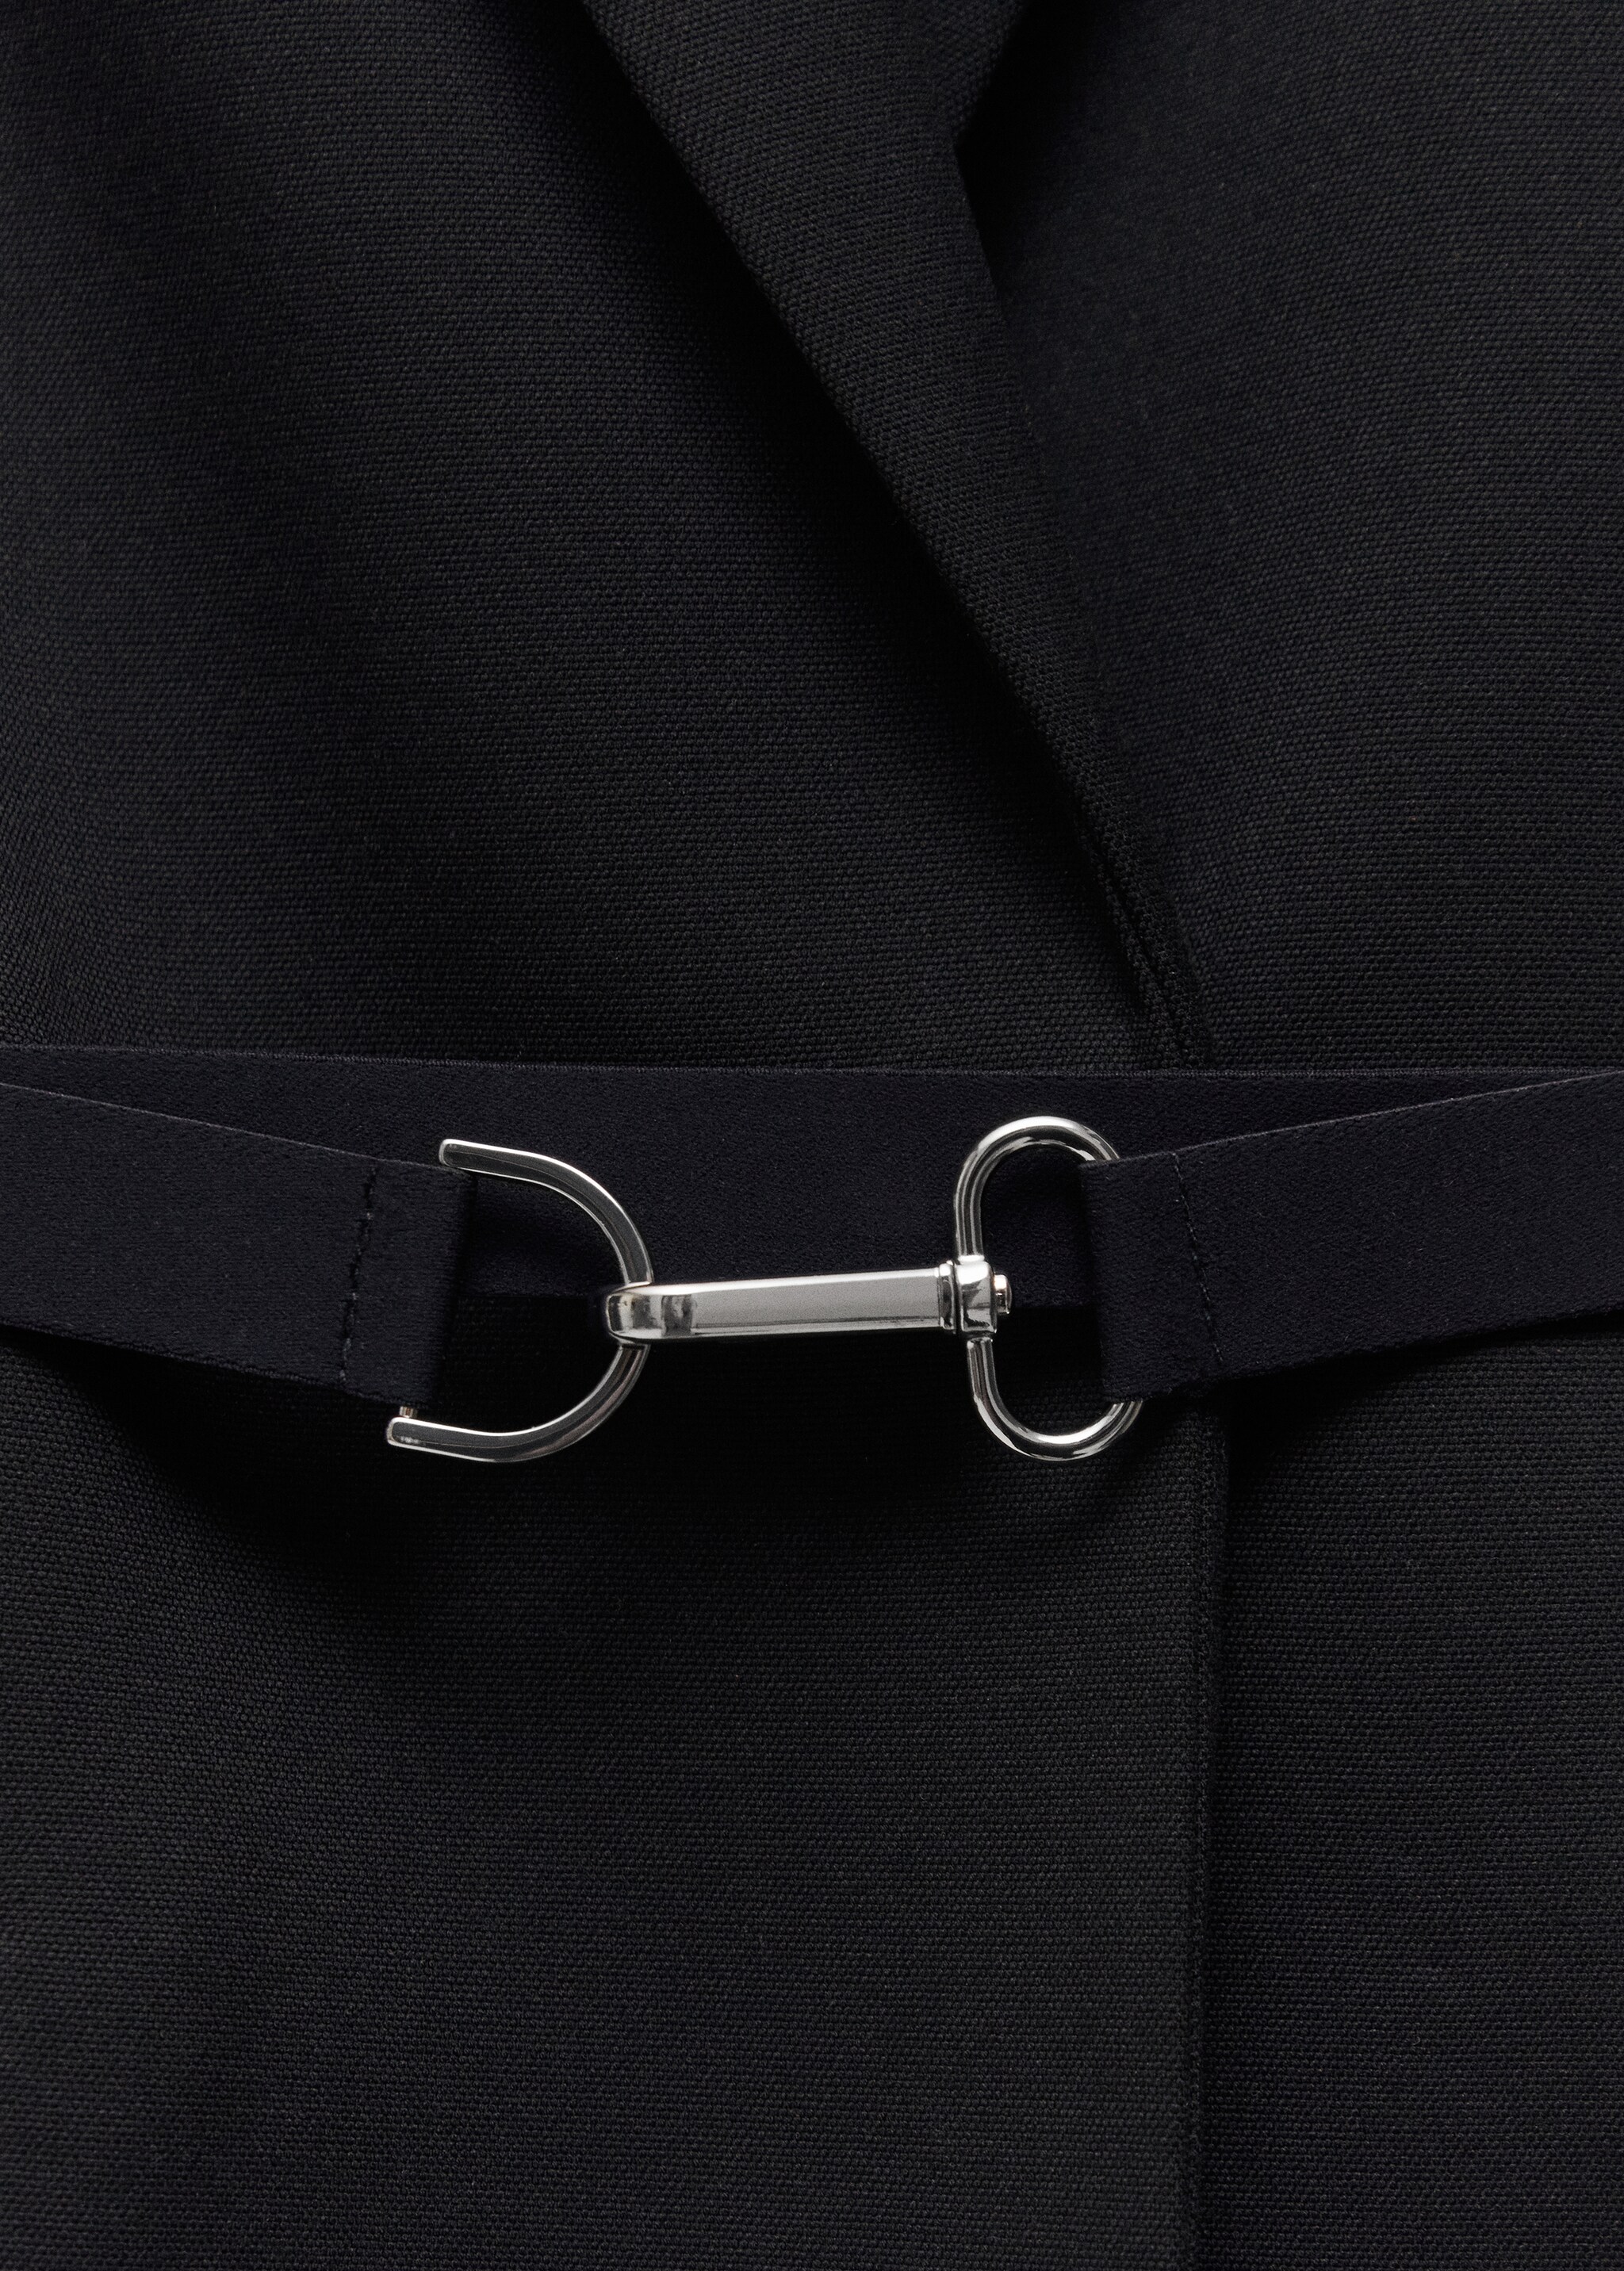 Belt structured blazer - Details of the article 8